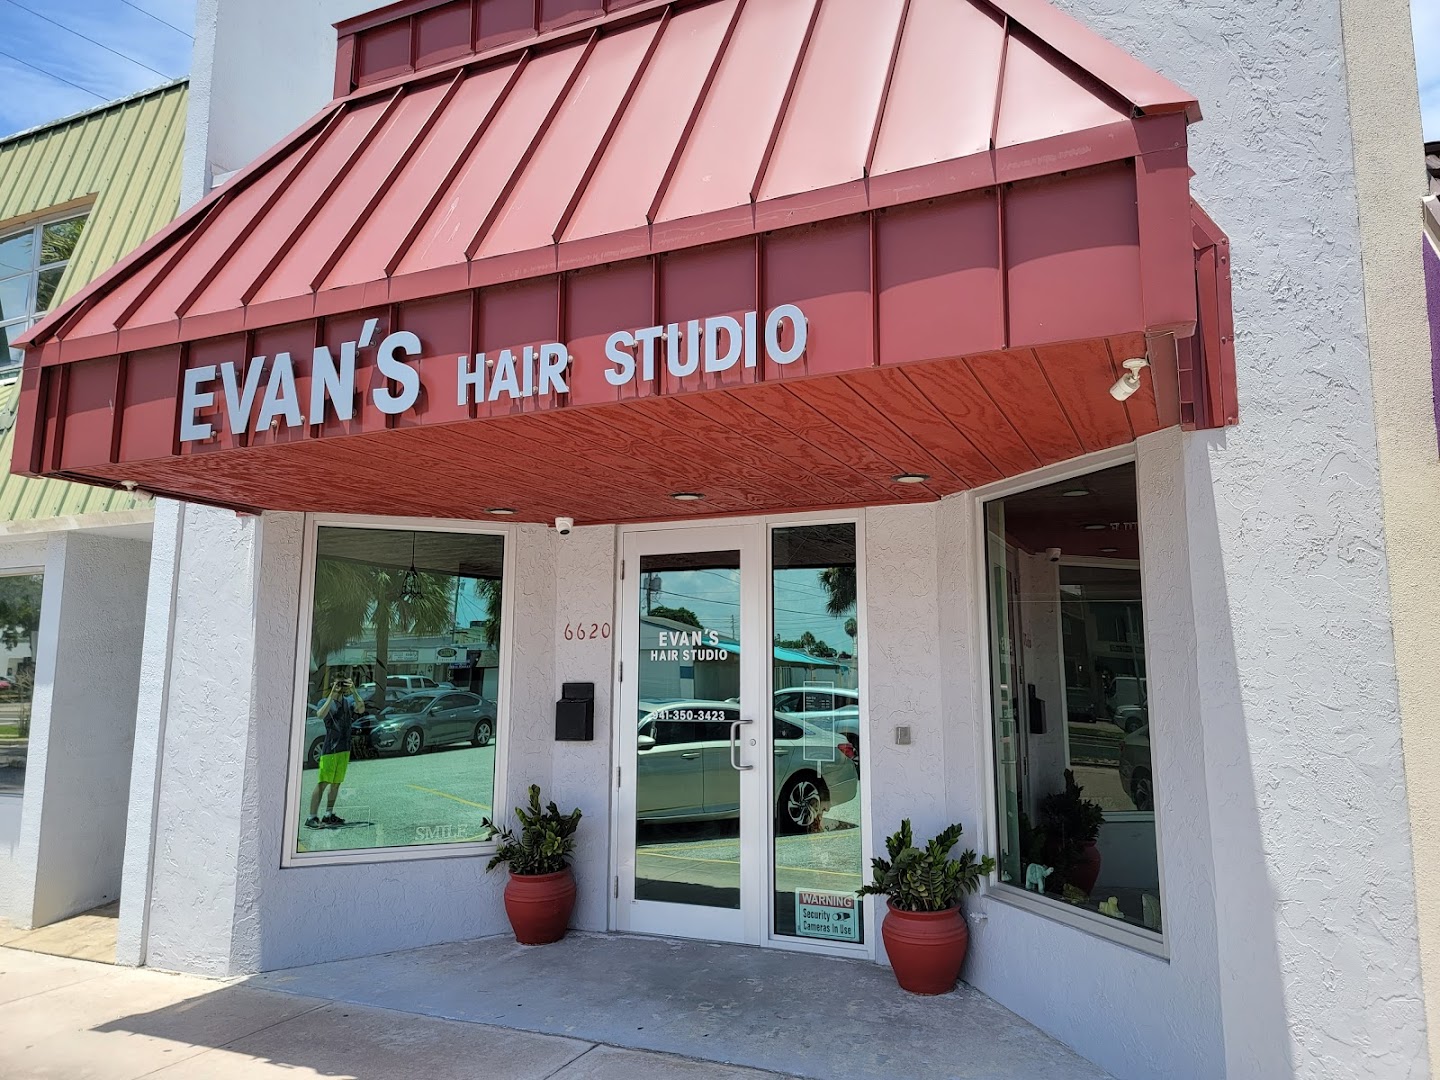 Evan's Hair Studio